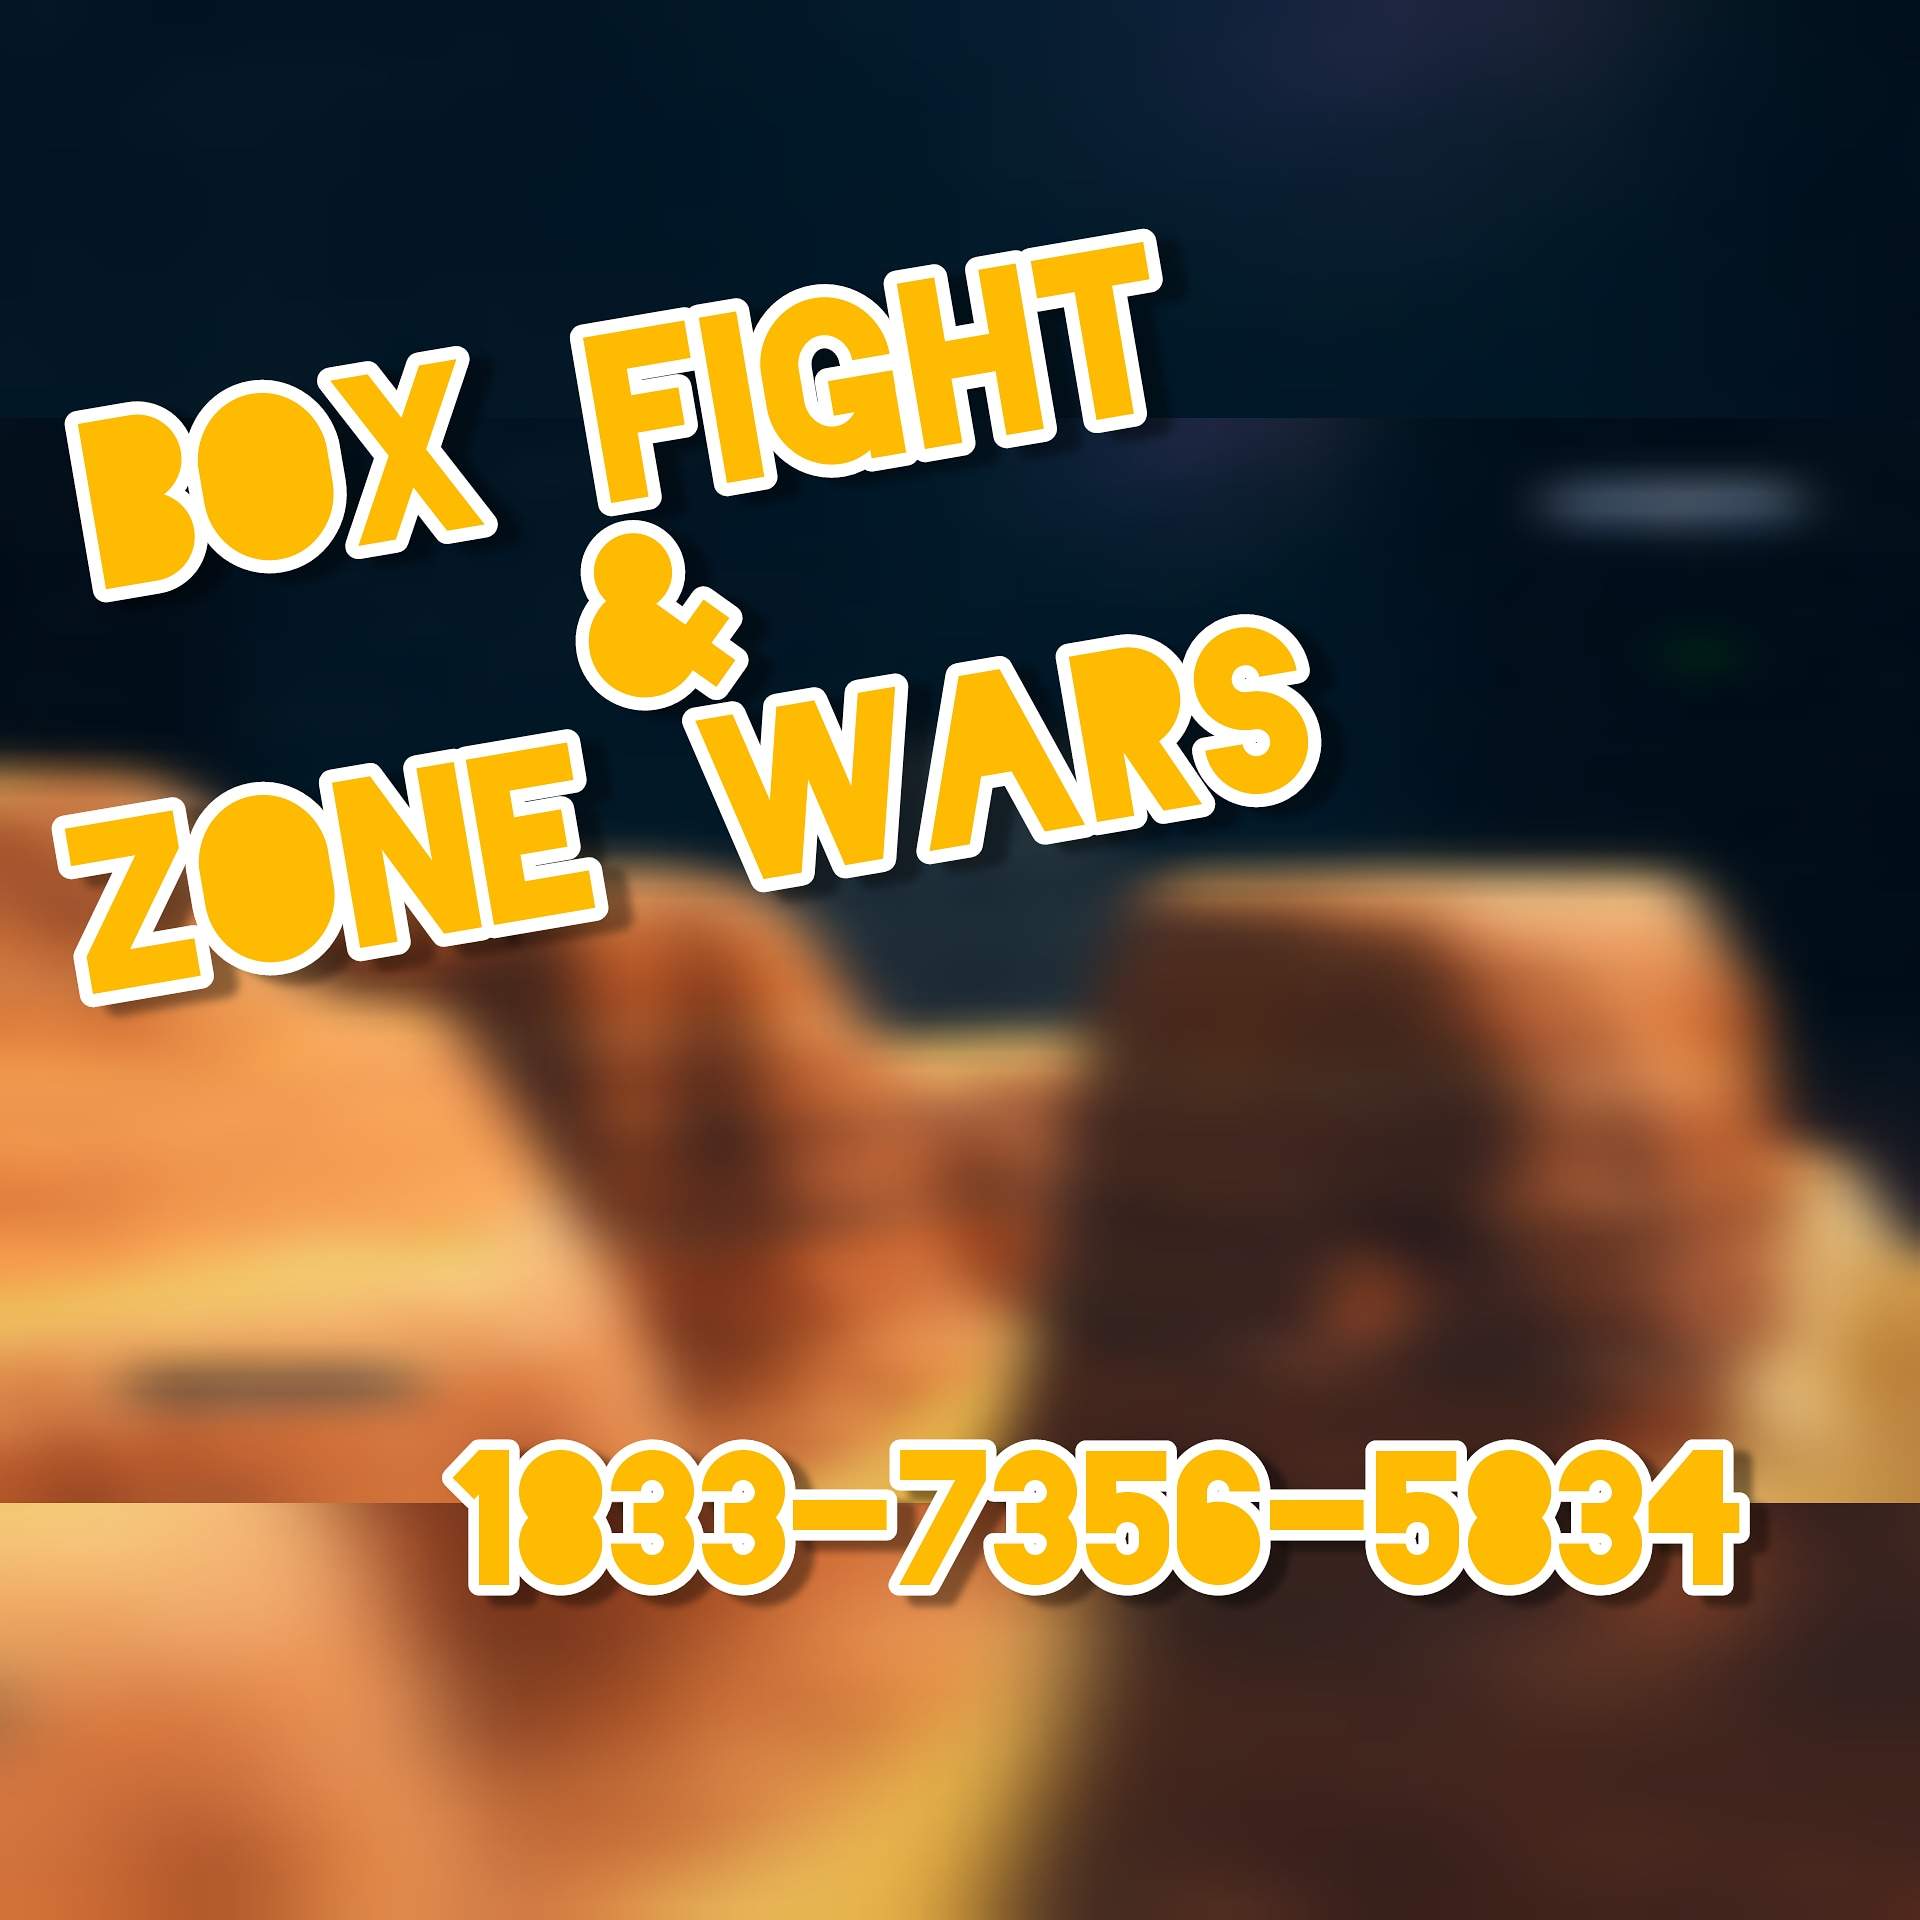 BOX FIGHT AND ZONE WARS DESERT